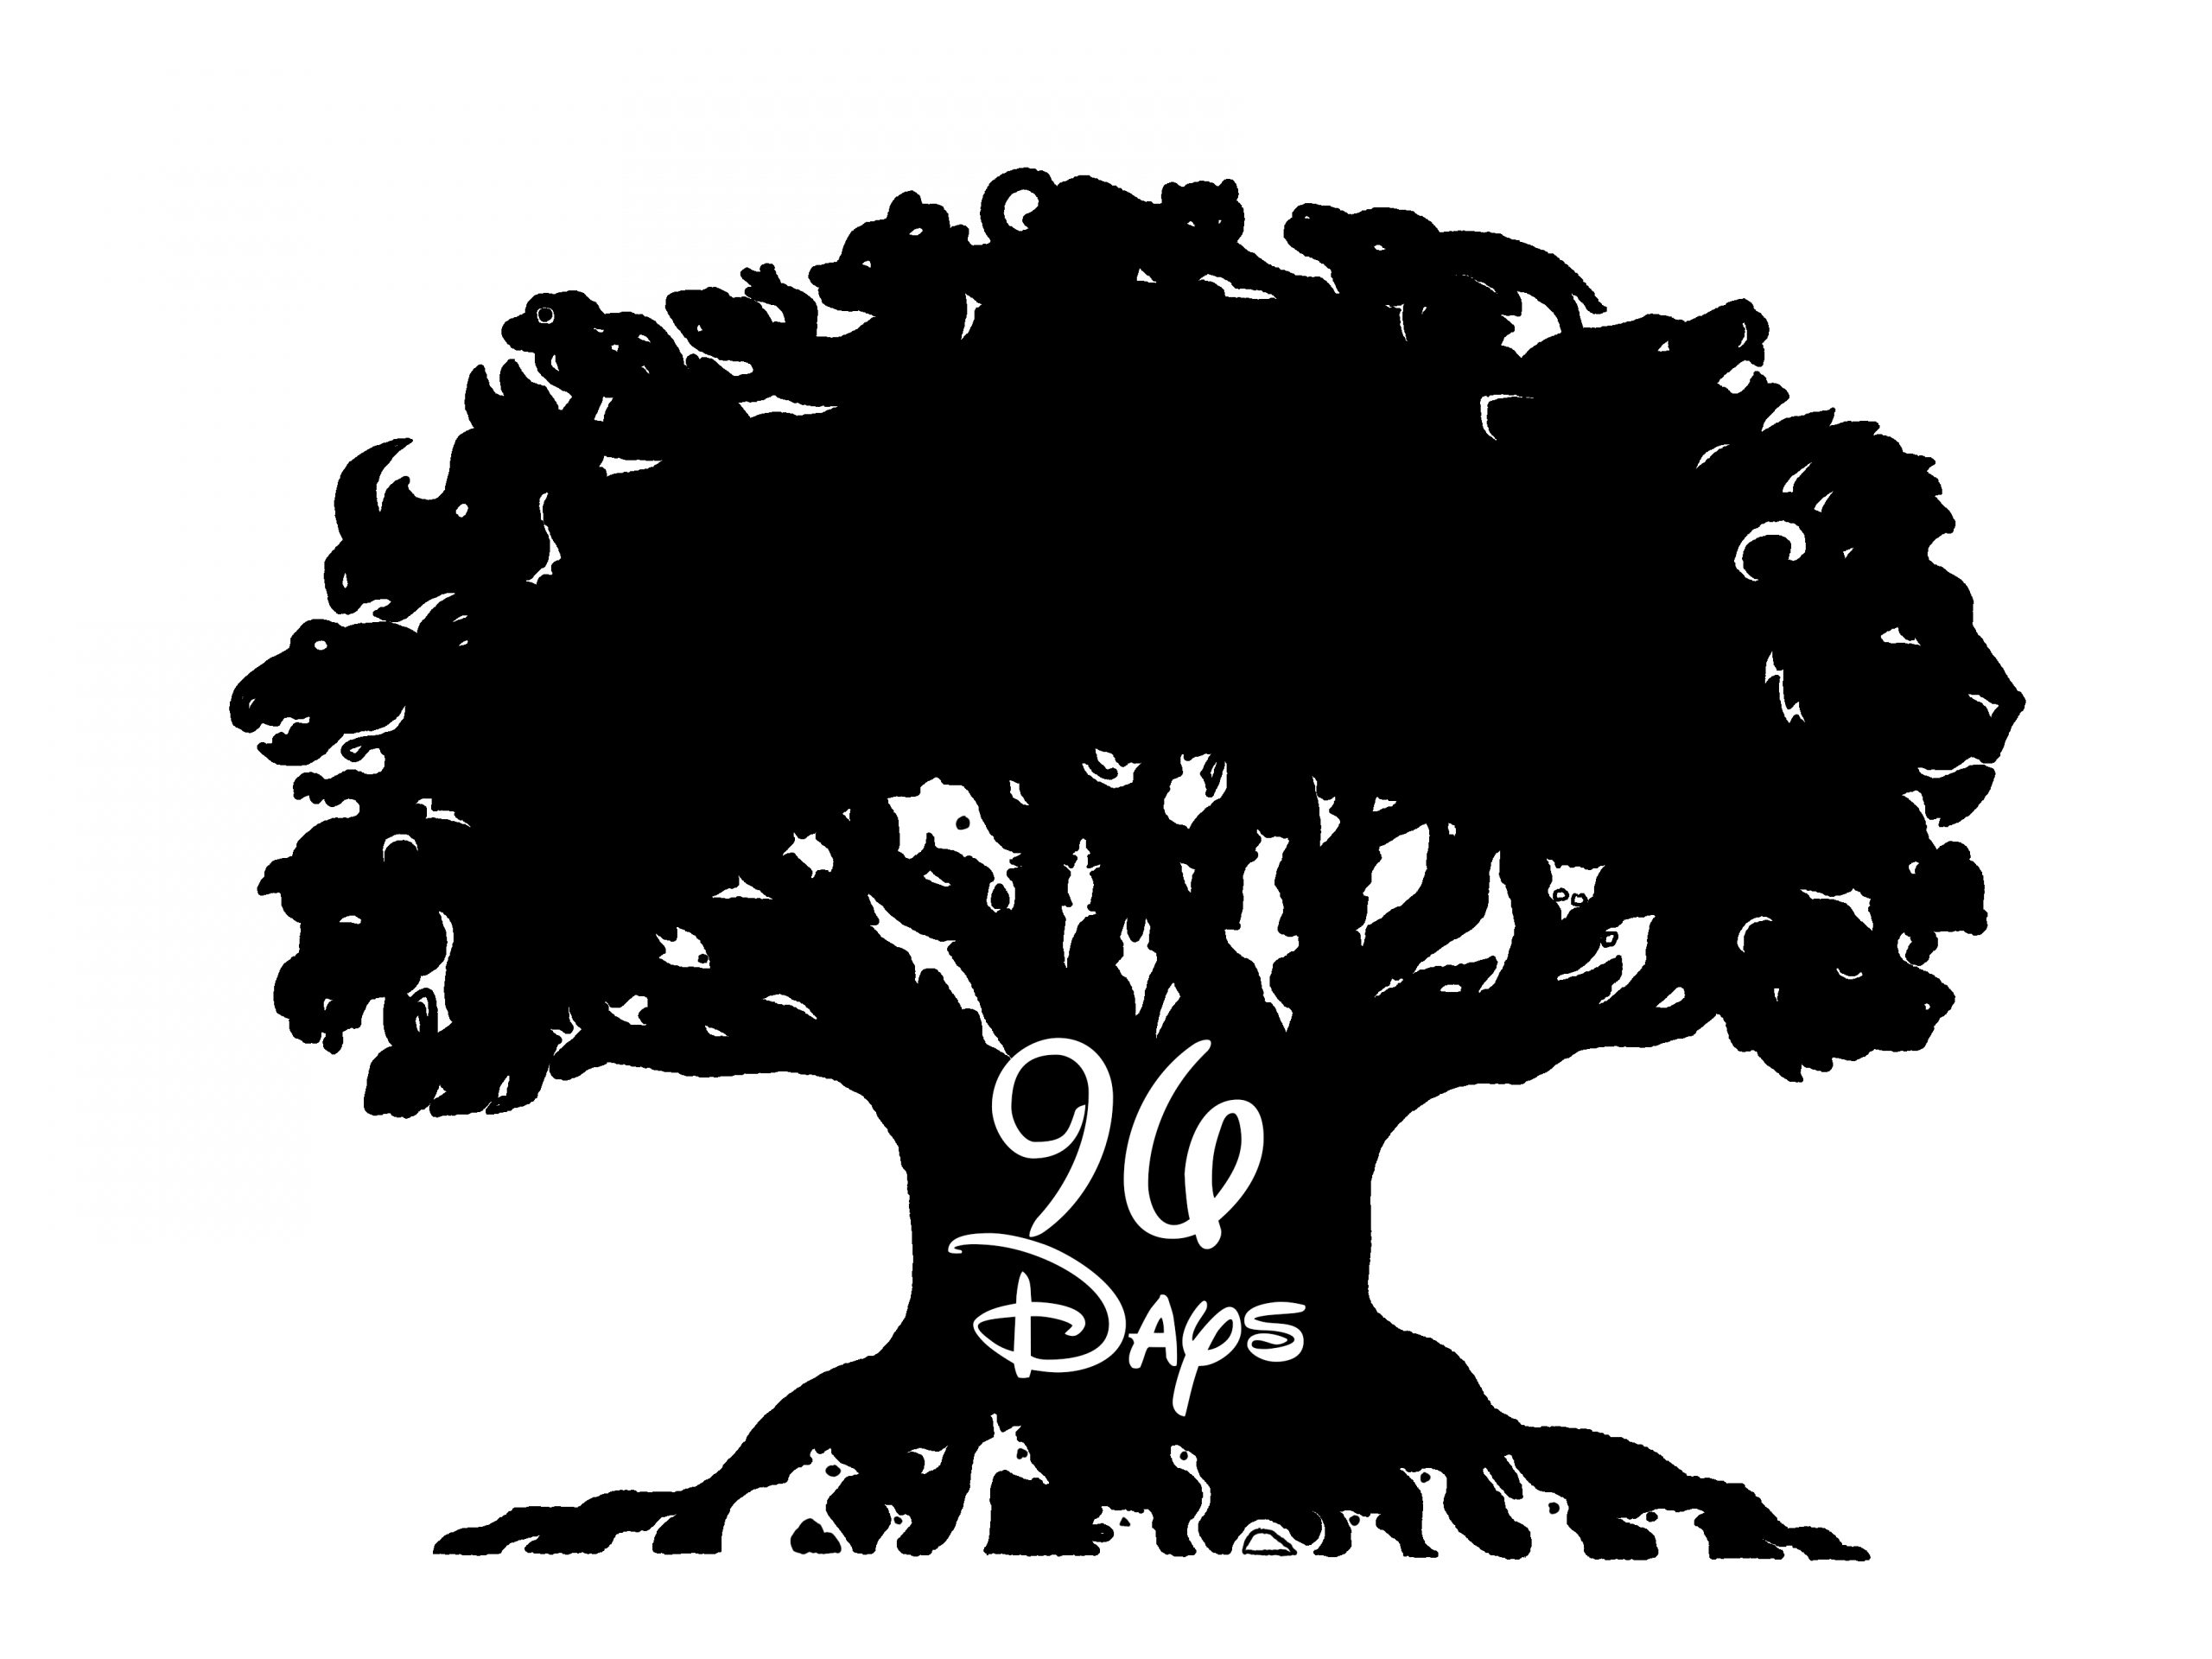 96 DAYS!!!